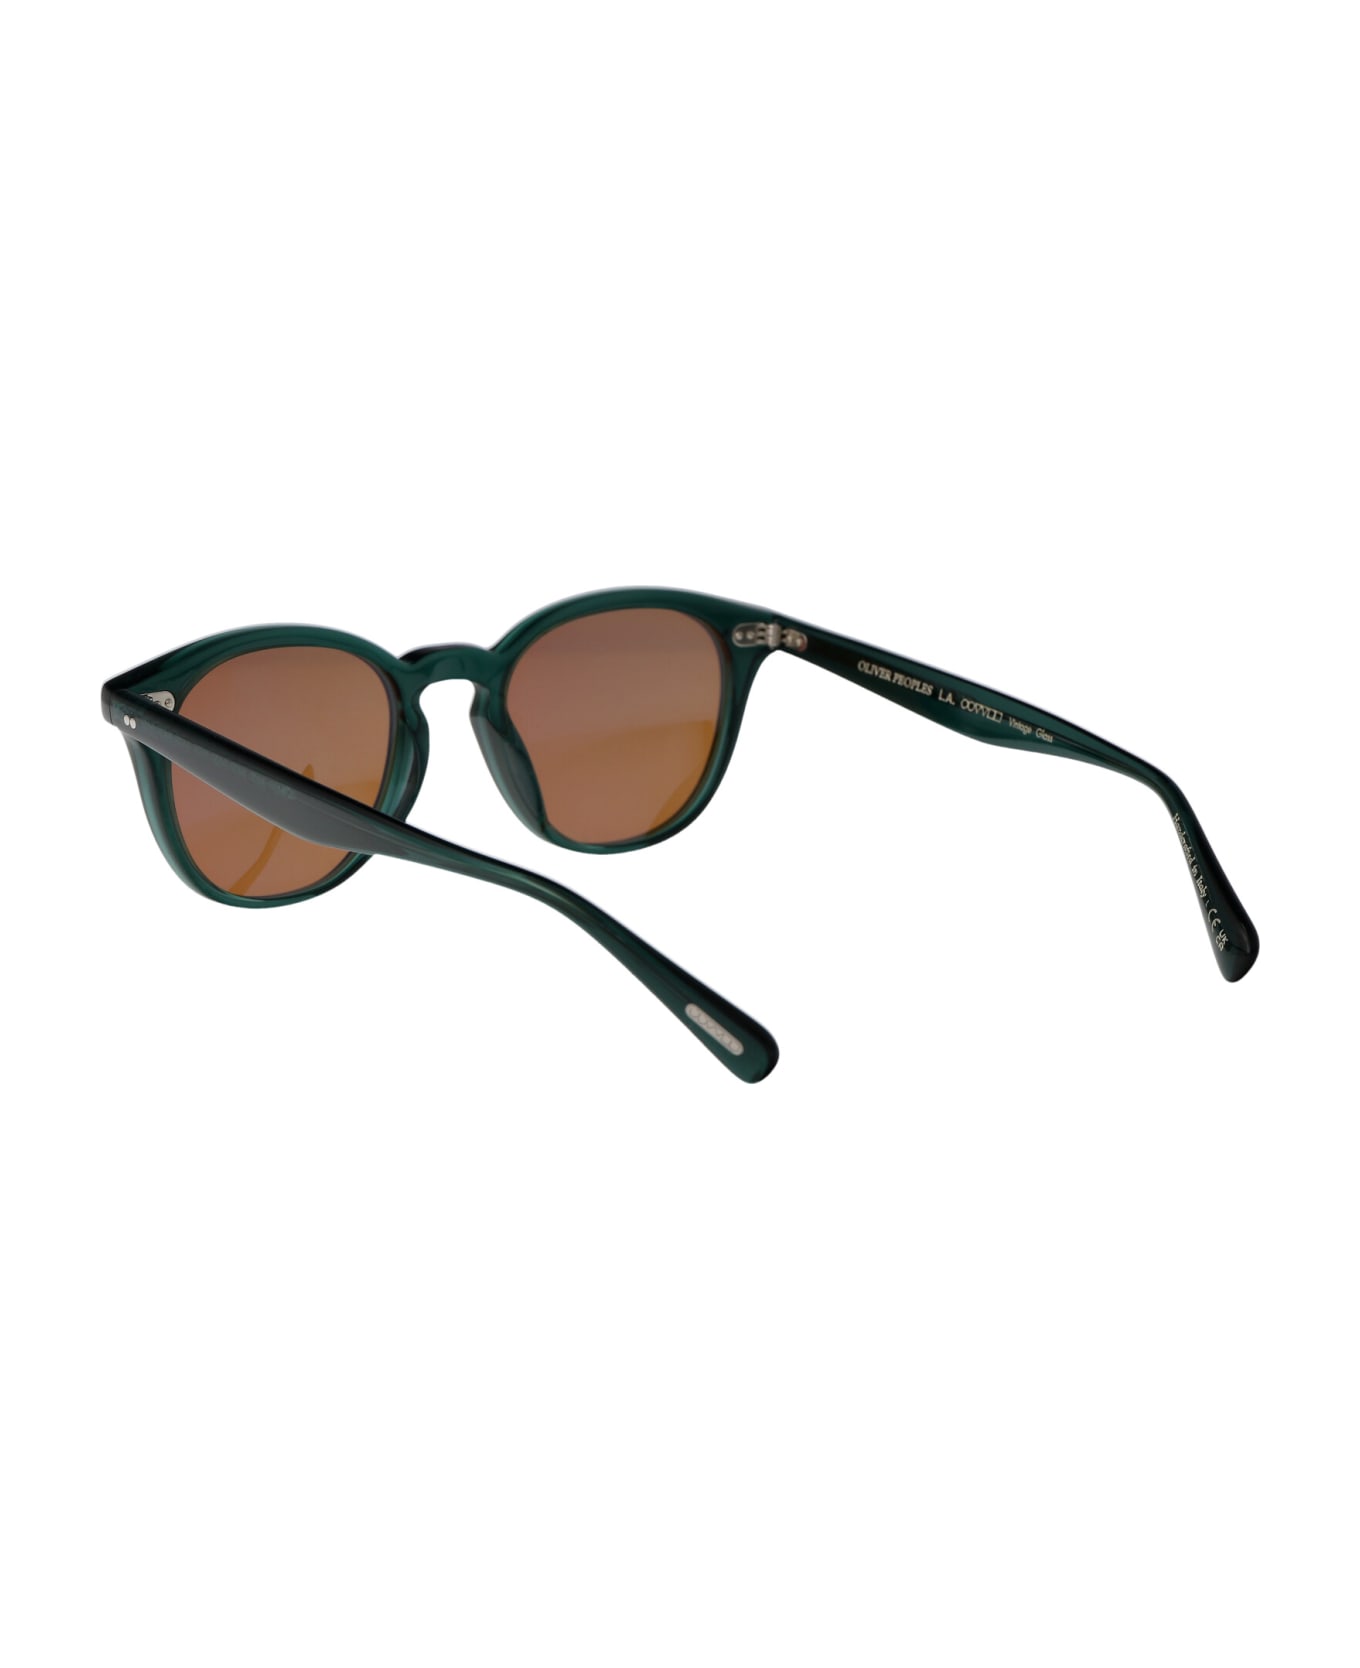 Oliver Peoples Desmon Sun Sunglasses - 176353 Translucent Dark Teal